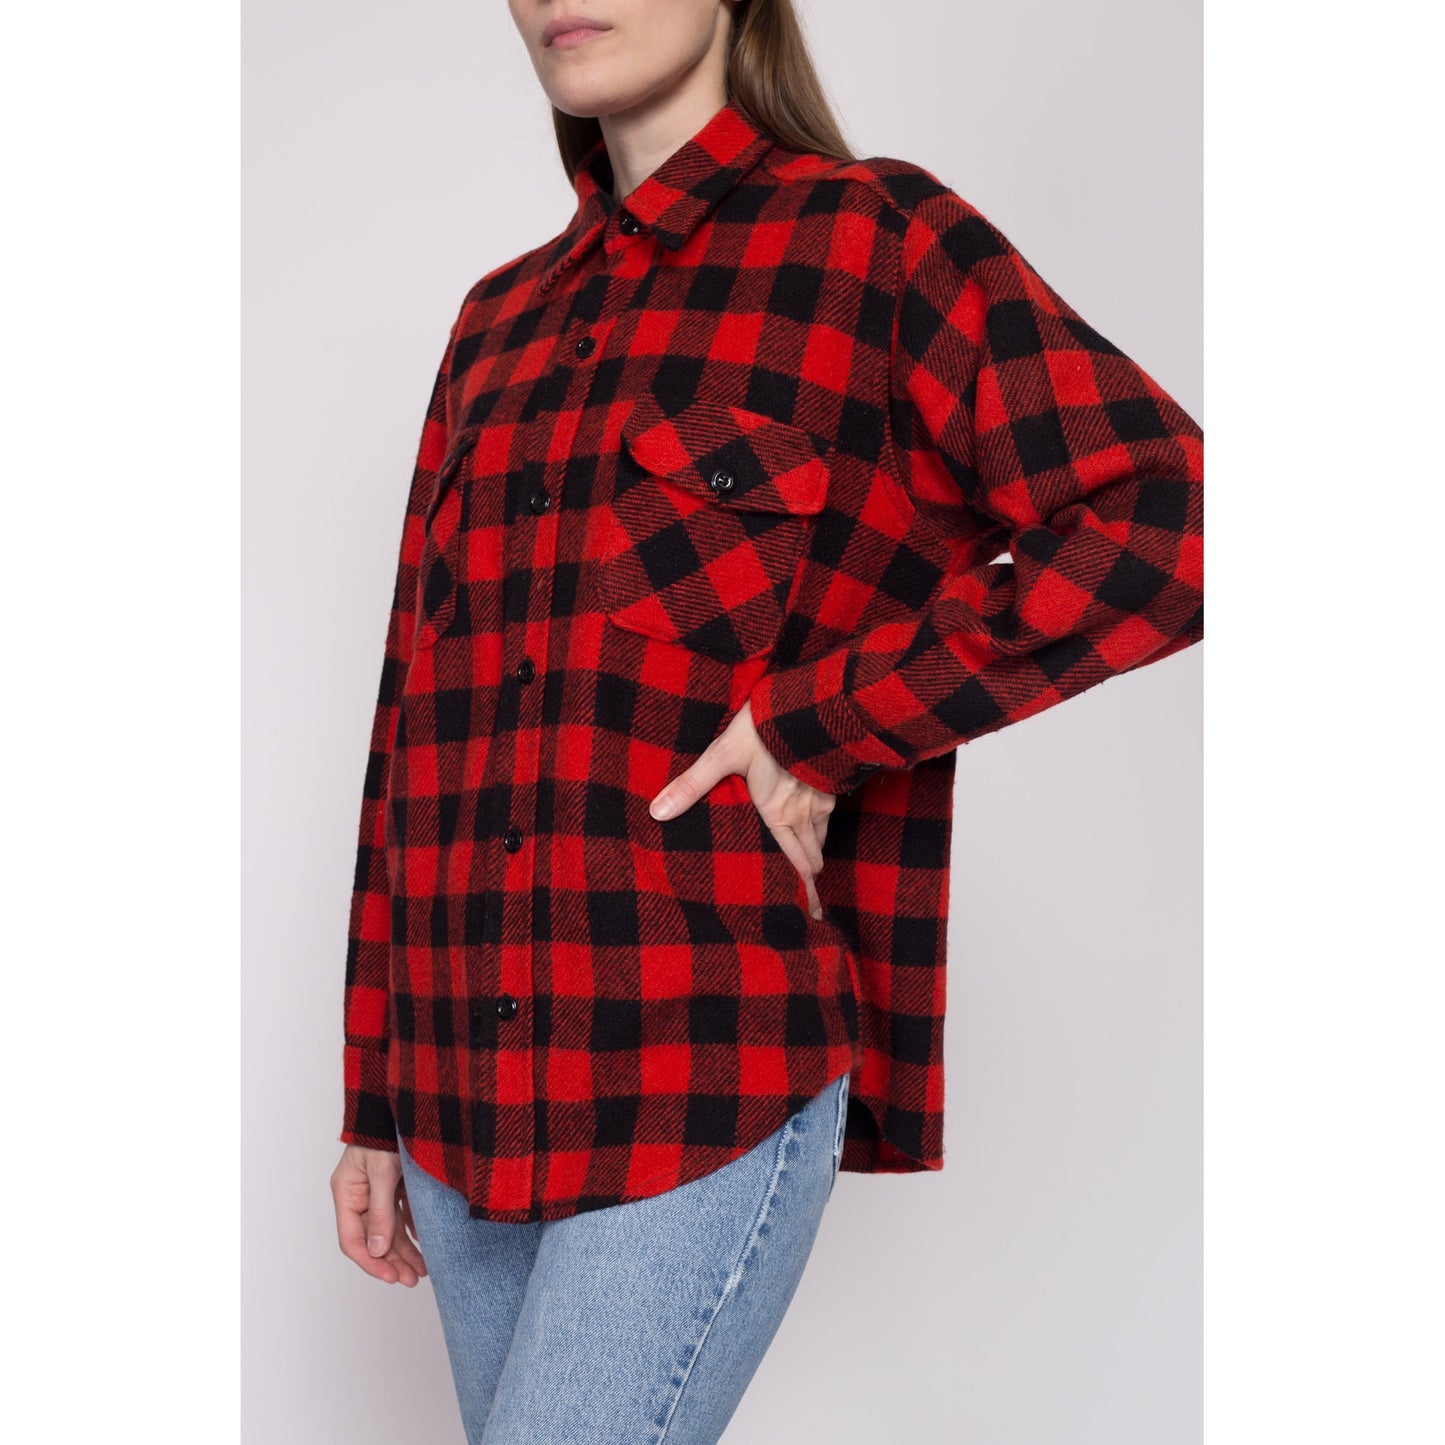 M-L| 70s Melton Buffalo Plaid Wool Shirt Jacket - Men's Medium, Women's Large | Vintage Red & Black Lumberjack Overshirt Shacket